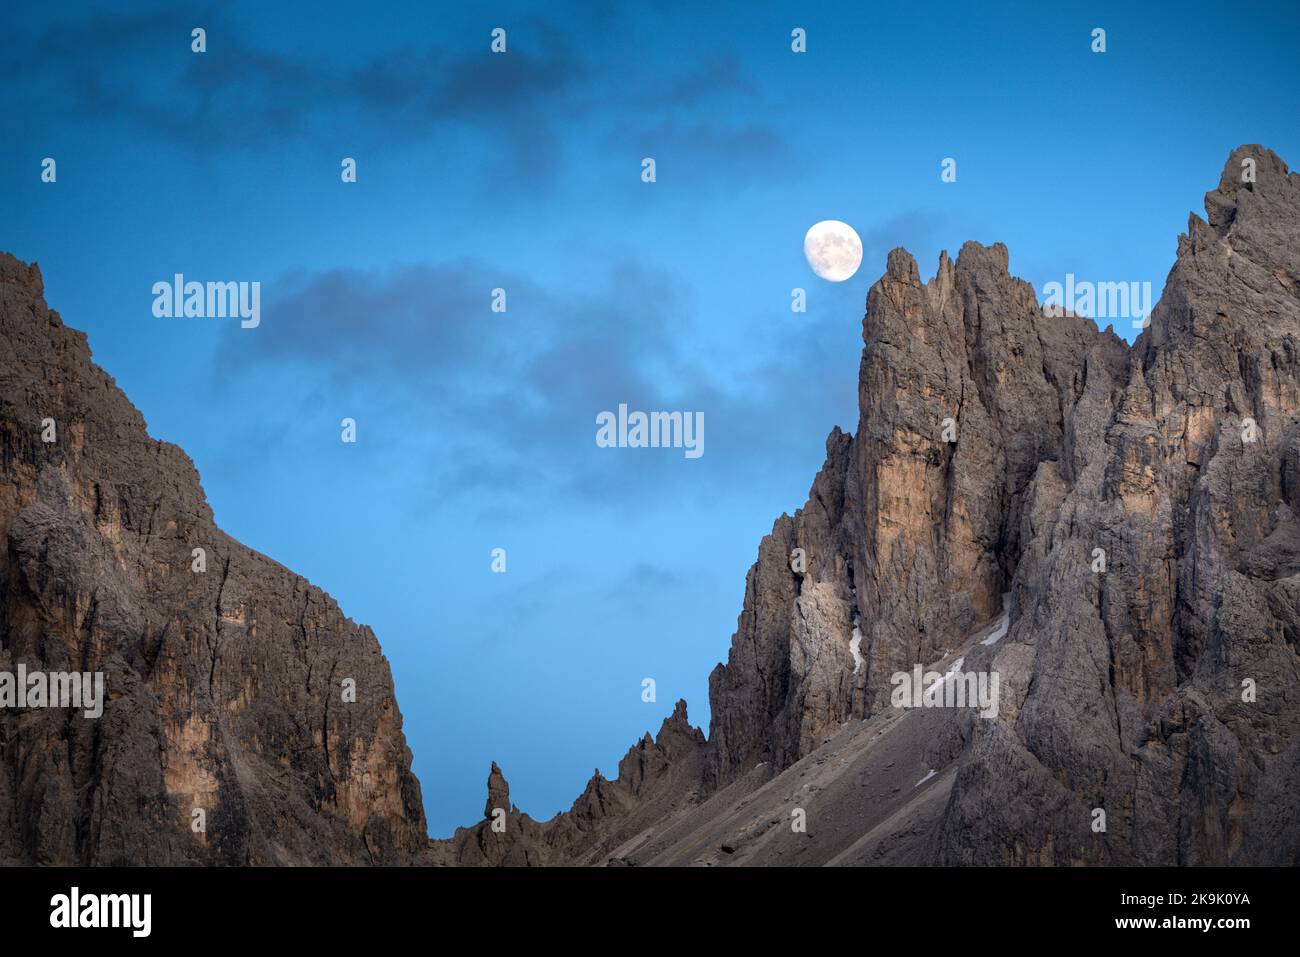 The moon over the rocky peaks, Dolomites Alps, Italy Stock Photo